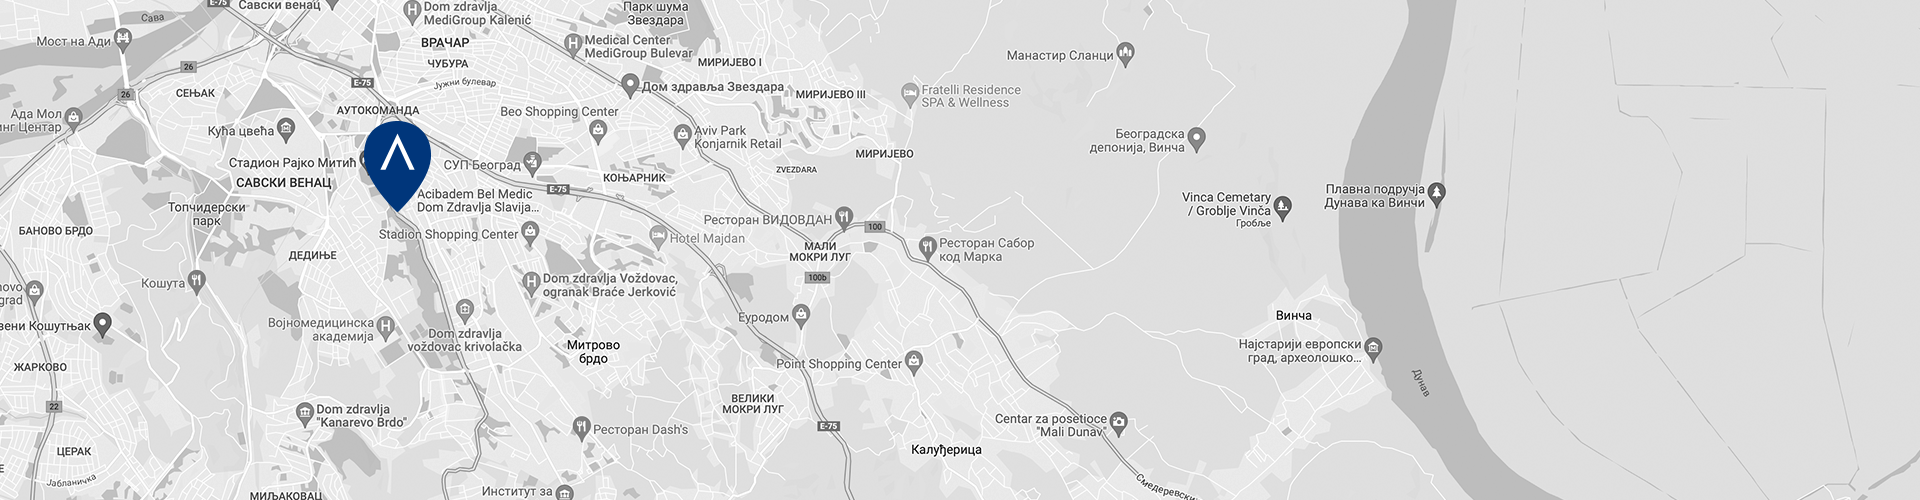 bel-medic-slavija-ogaranak-tip-merkezi-google-maps-image.png